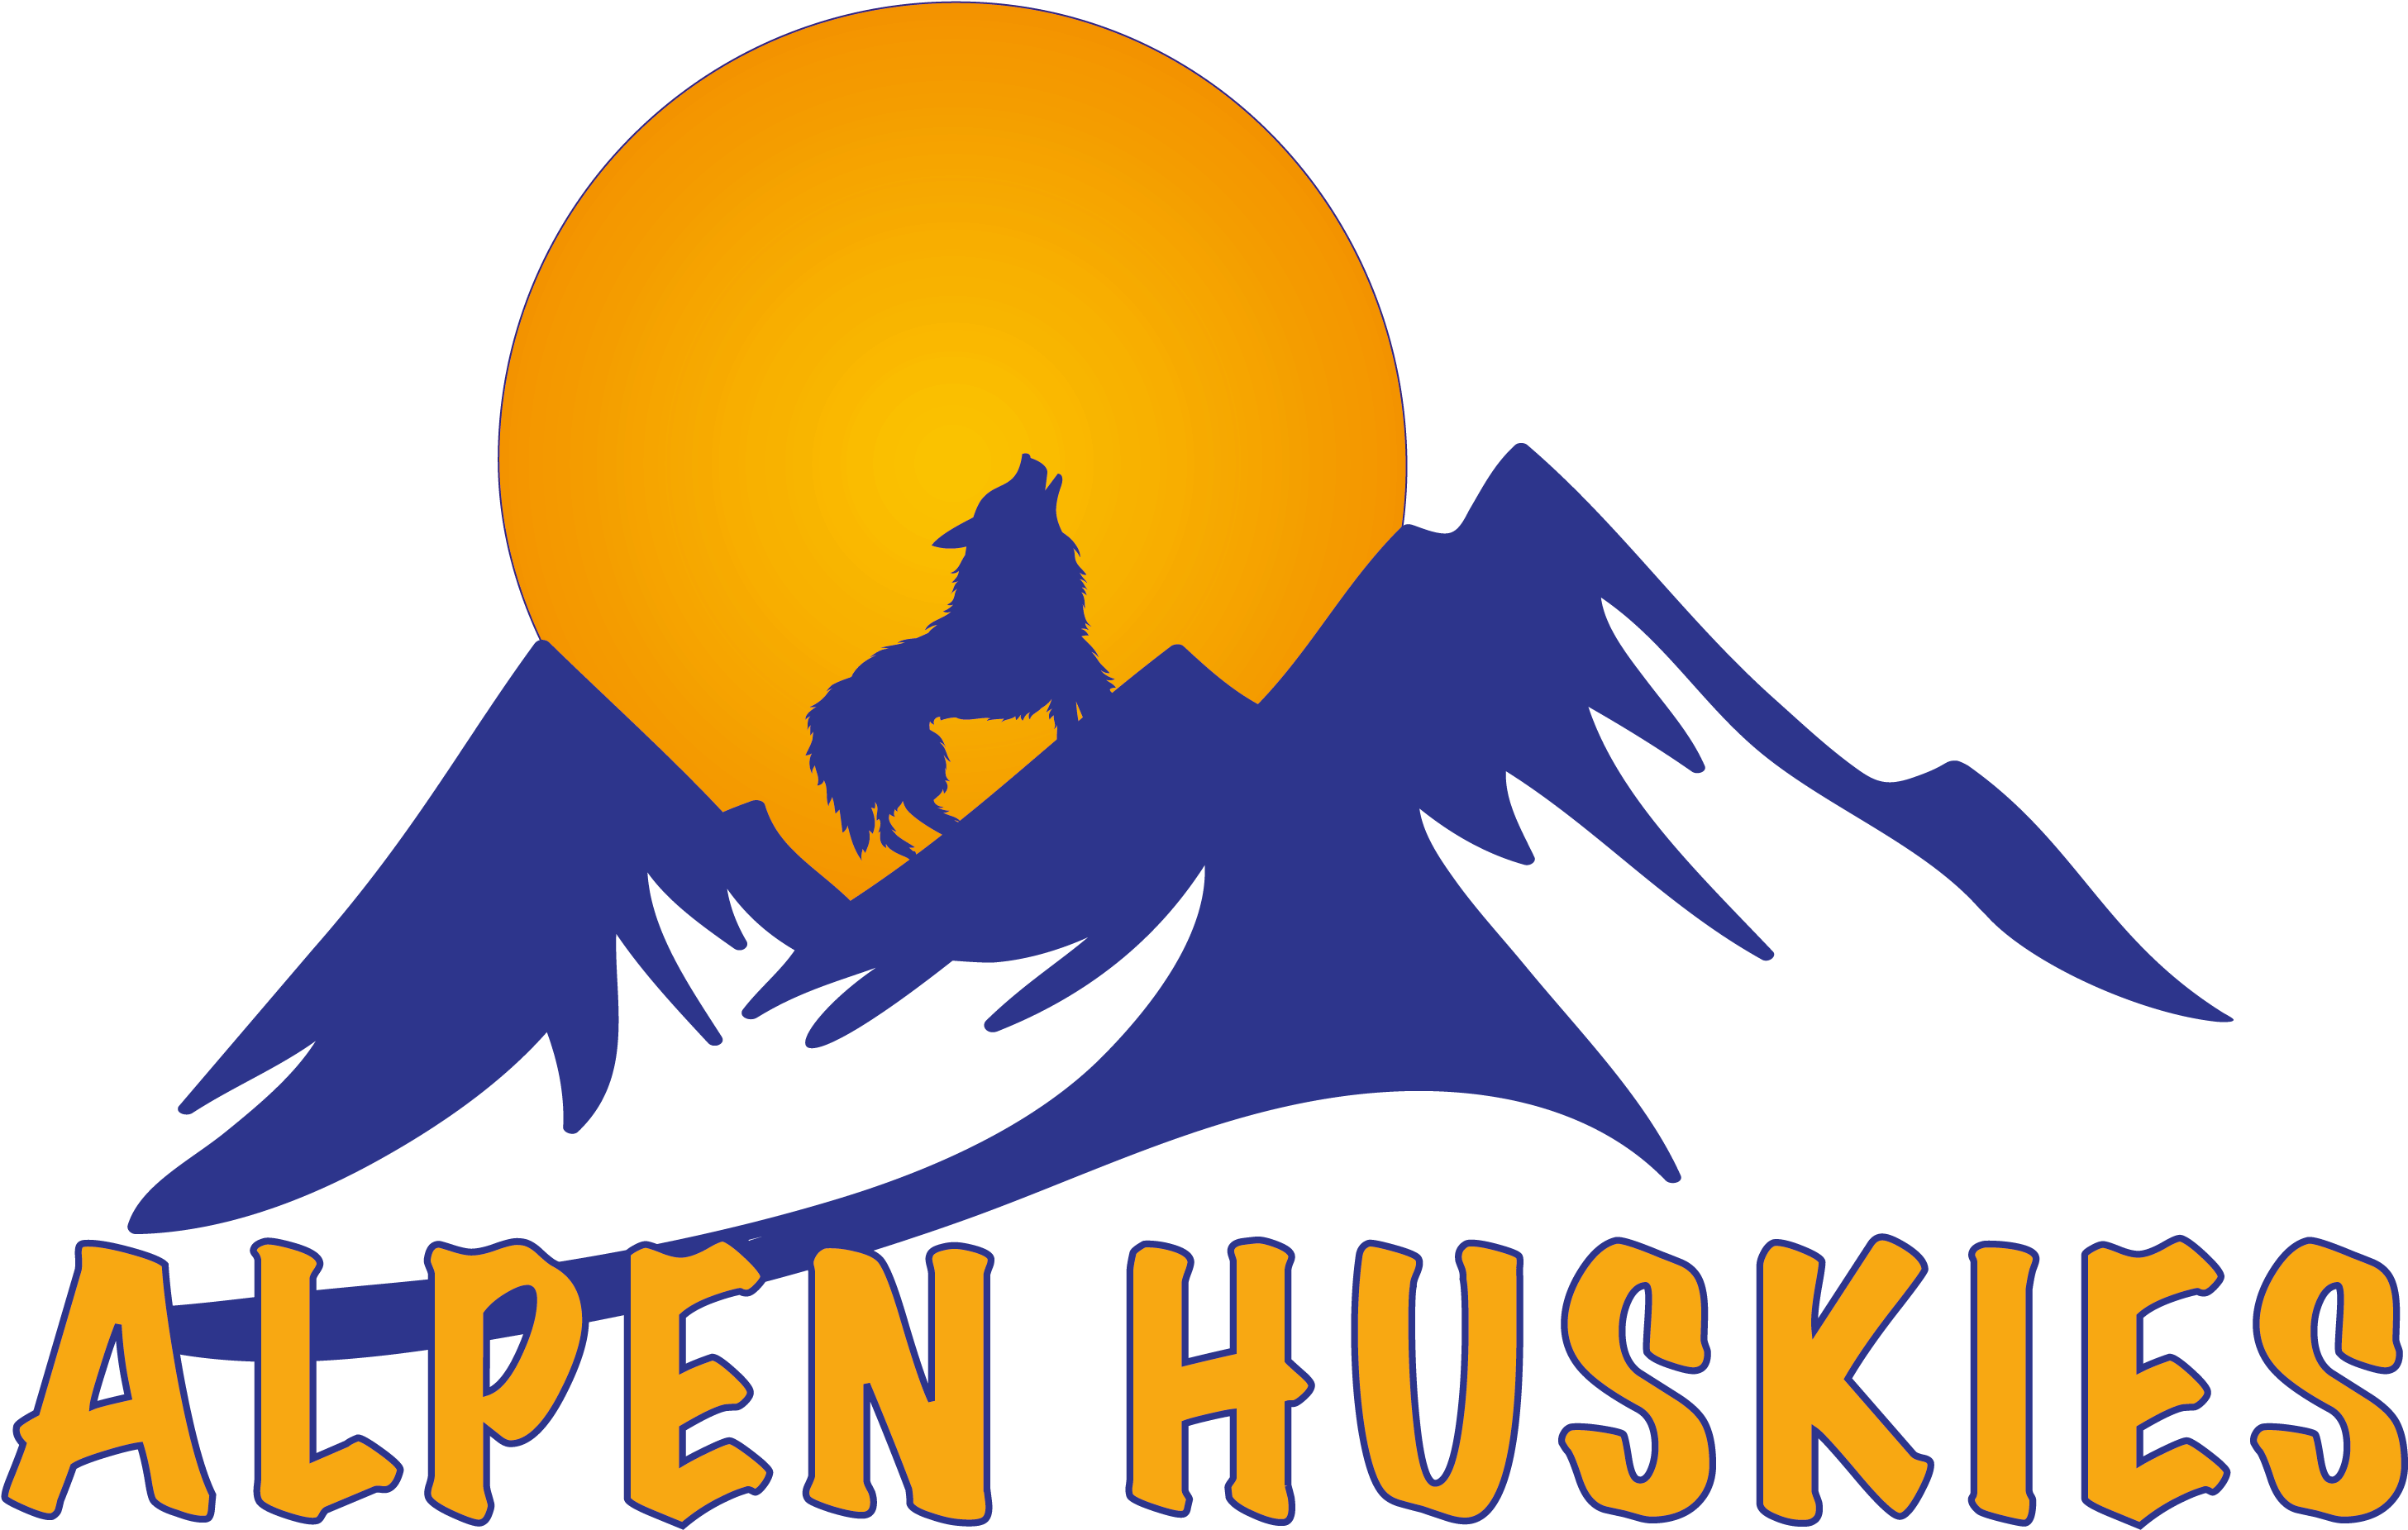 Go Dogsledding In The Yukon With Alpen Huskies Adventures - Graphic Design (3548x2326)